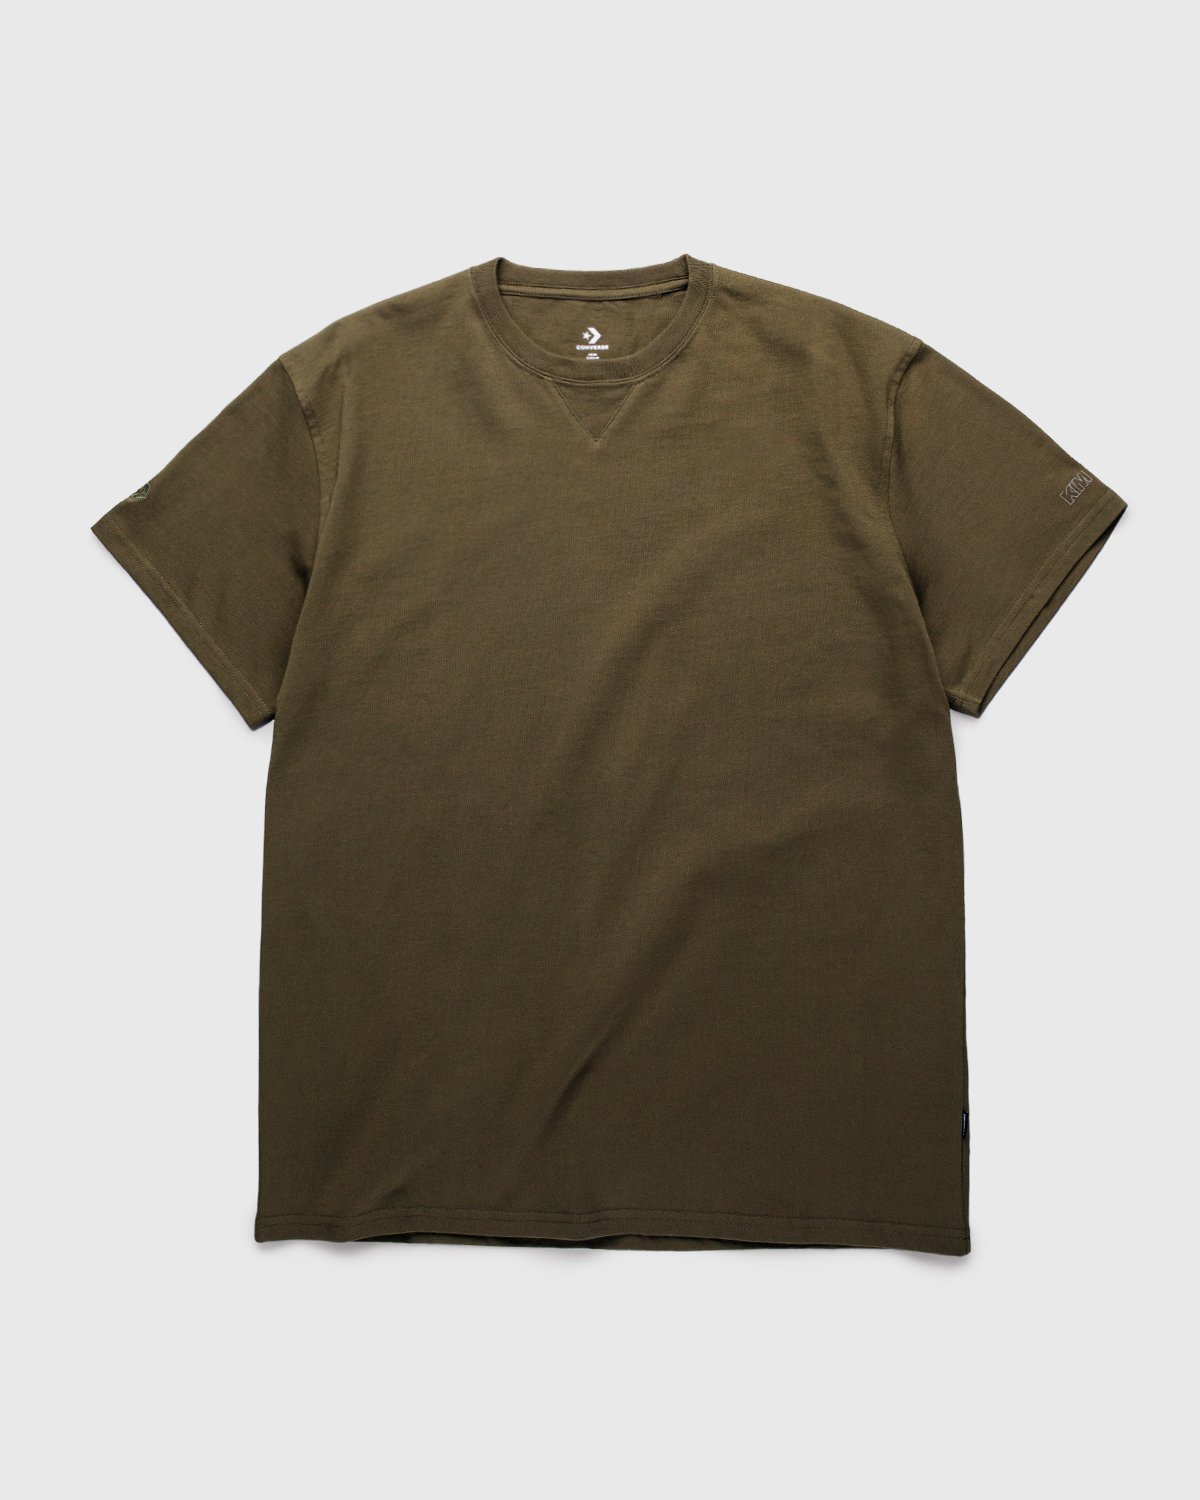 Converse x Kim Jones - T-Shirt Burnt Olive - Clothing - Green - Image 1